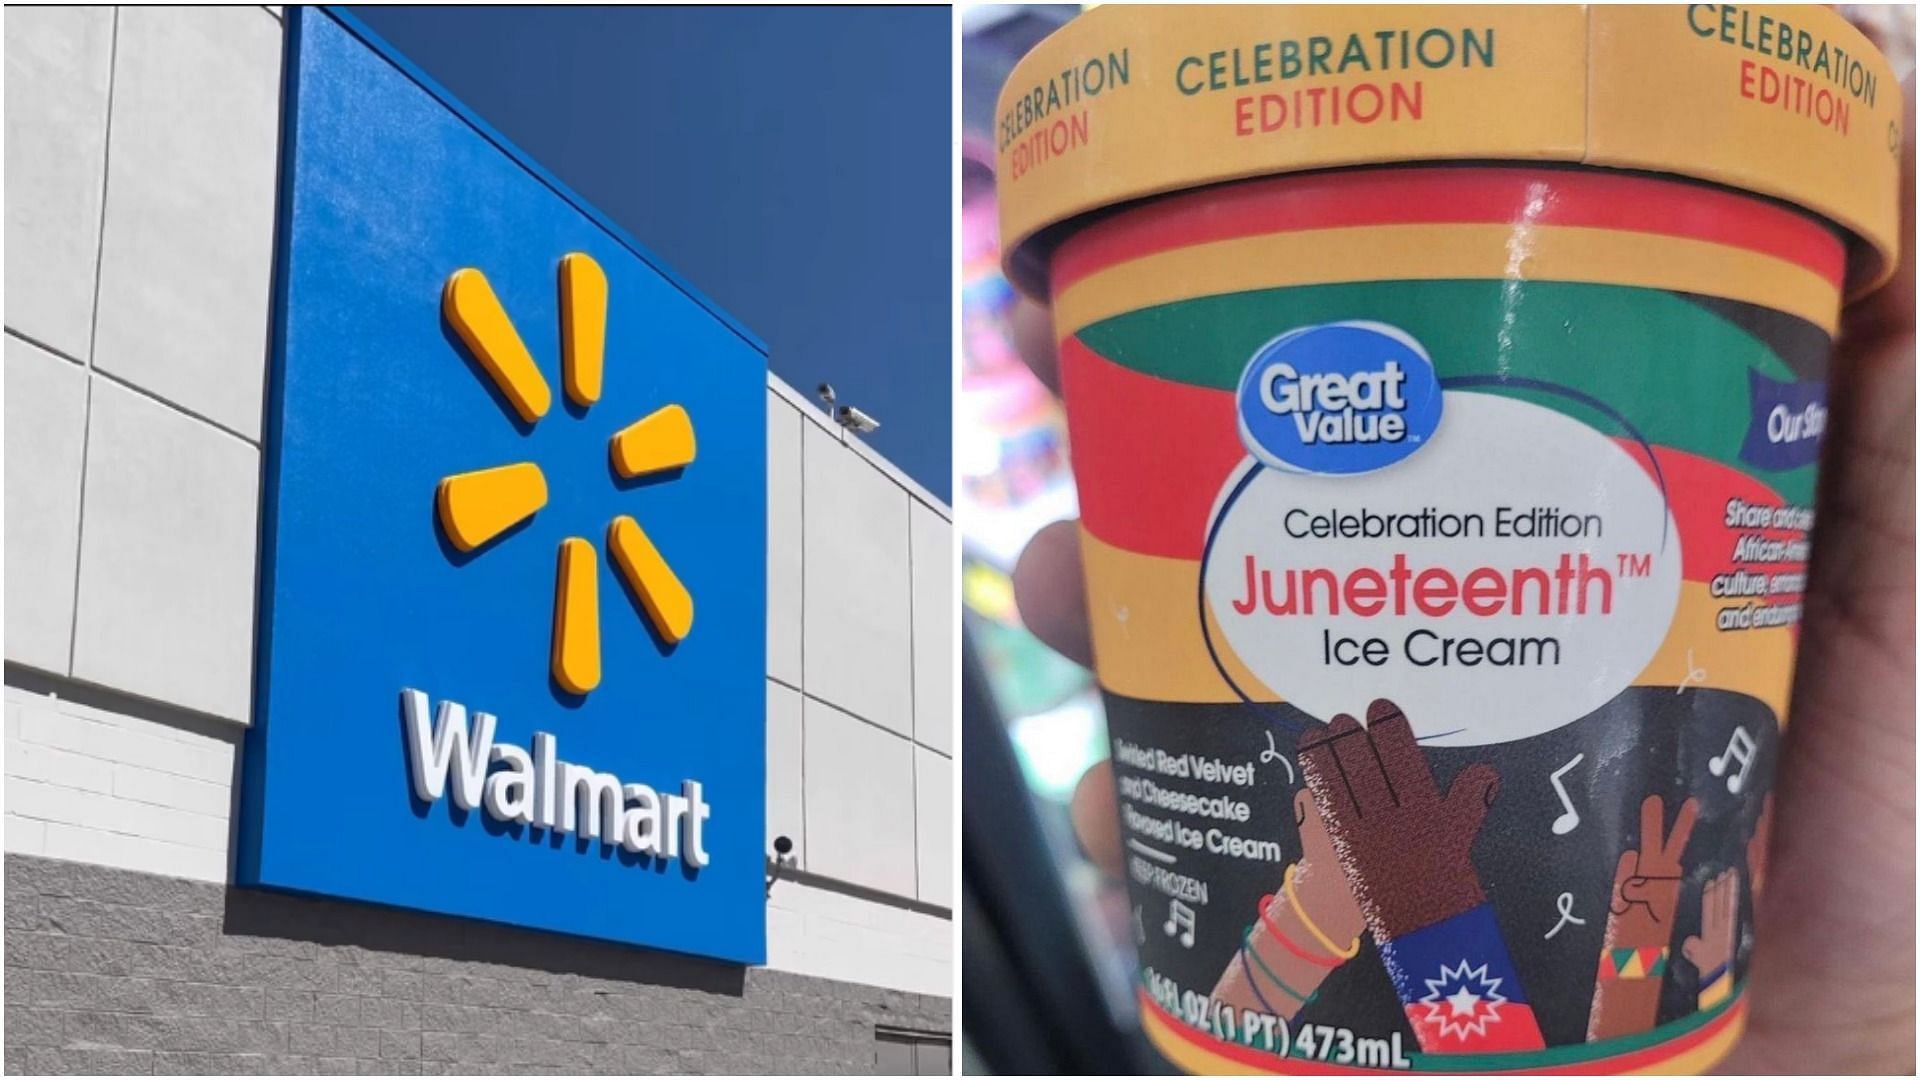 Walmart pulled back icecream after receiving backlash online (Image via @walmart/Instagram and @PaigeDavidoff/Twitter)